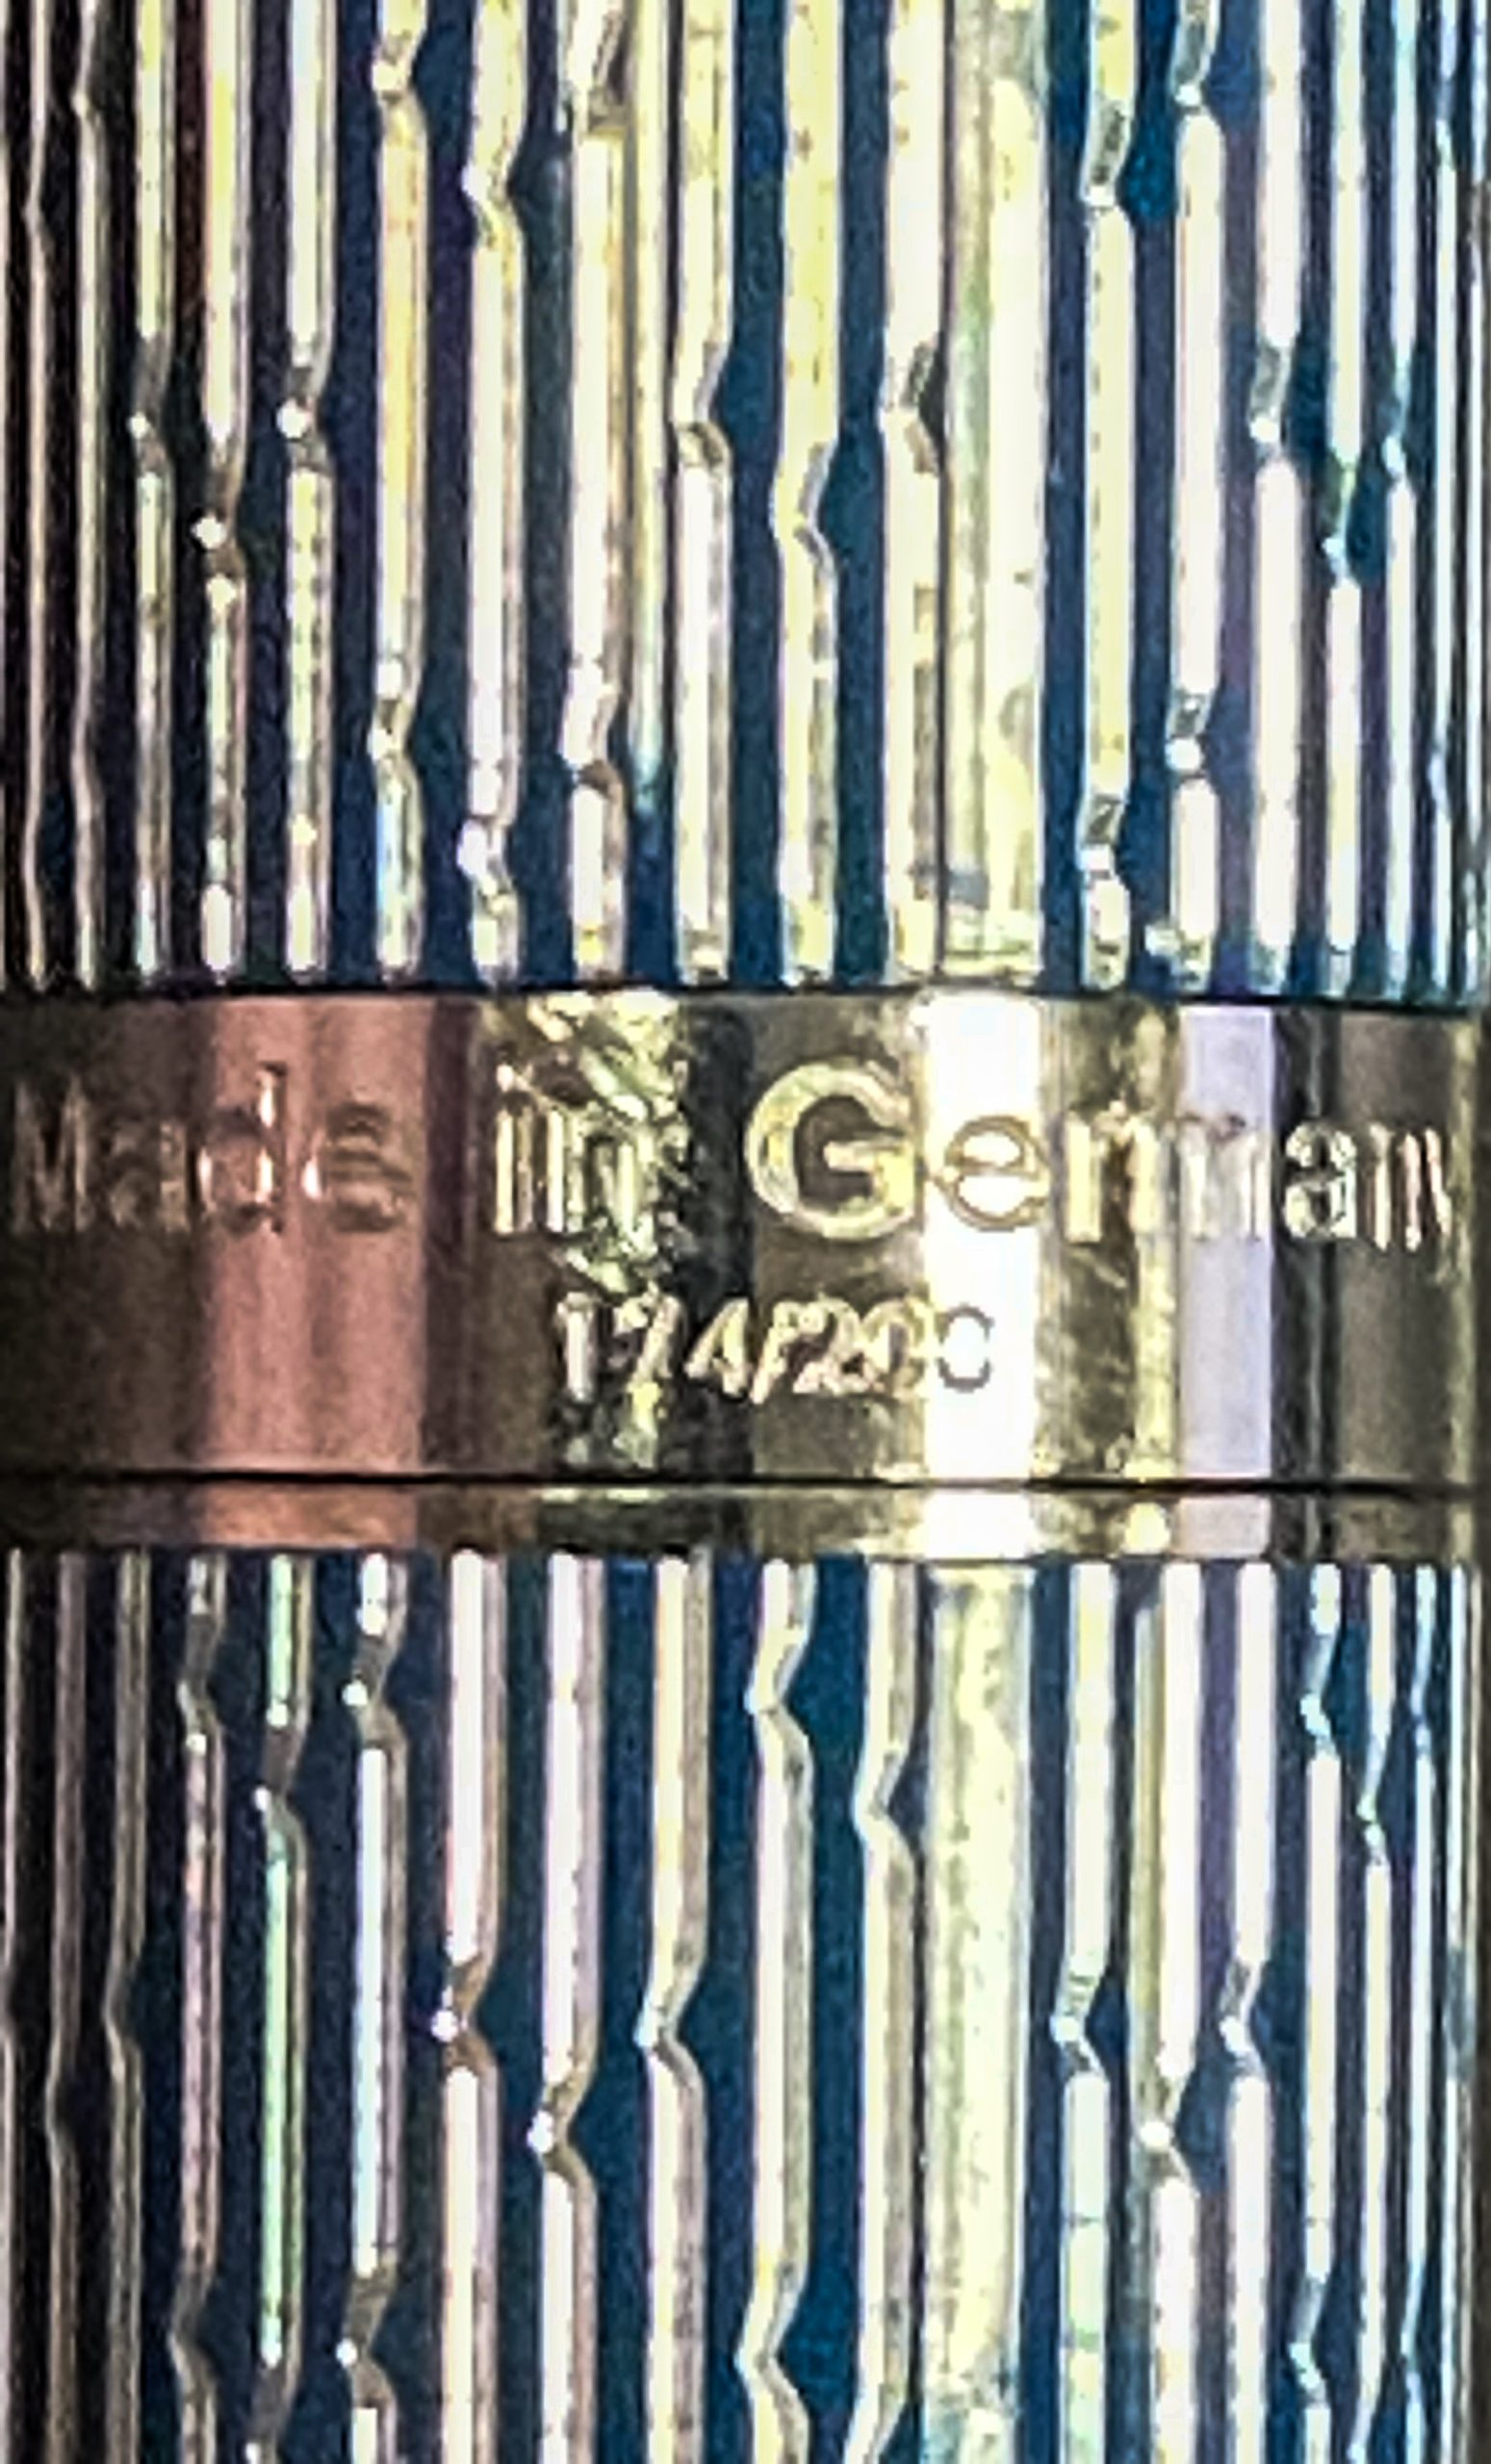 Cap band of my Waldmann showing 174/200.